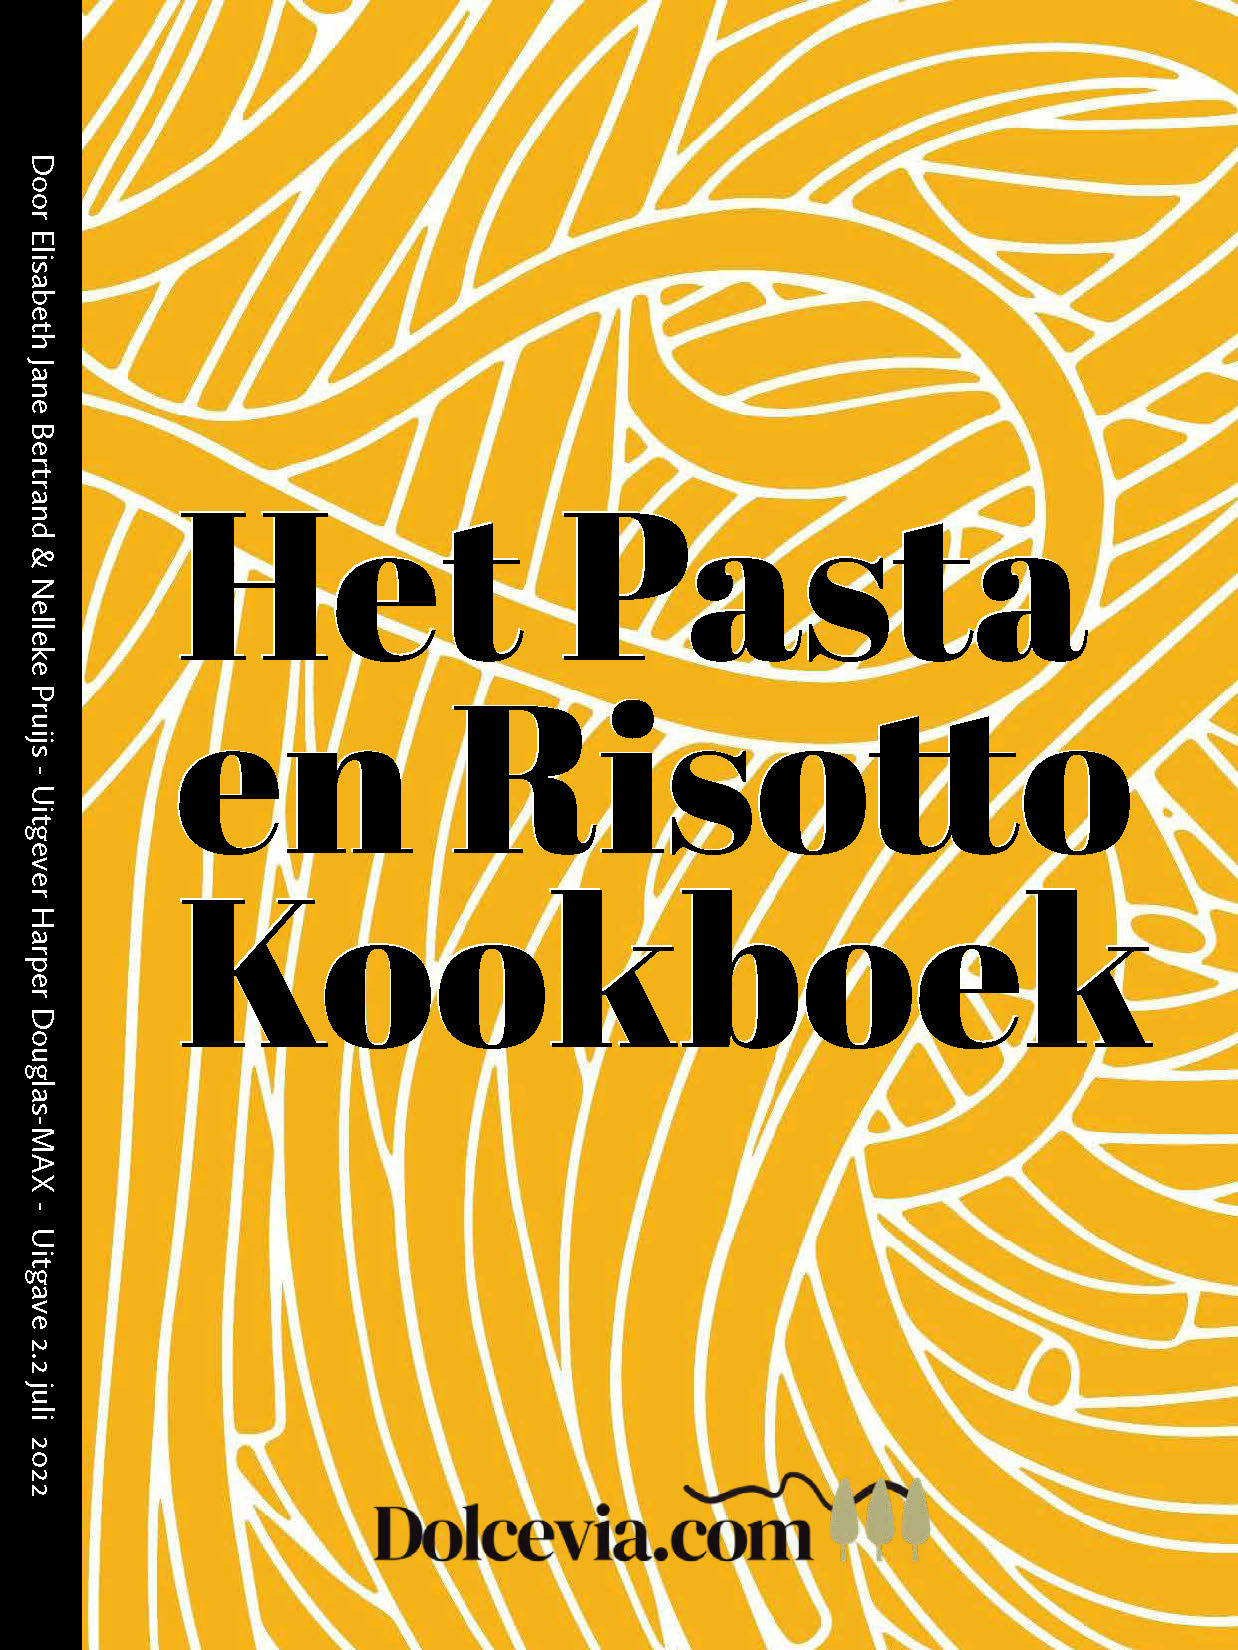 pasta-risotto-kookboek-van-dolcevia-com